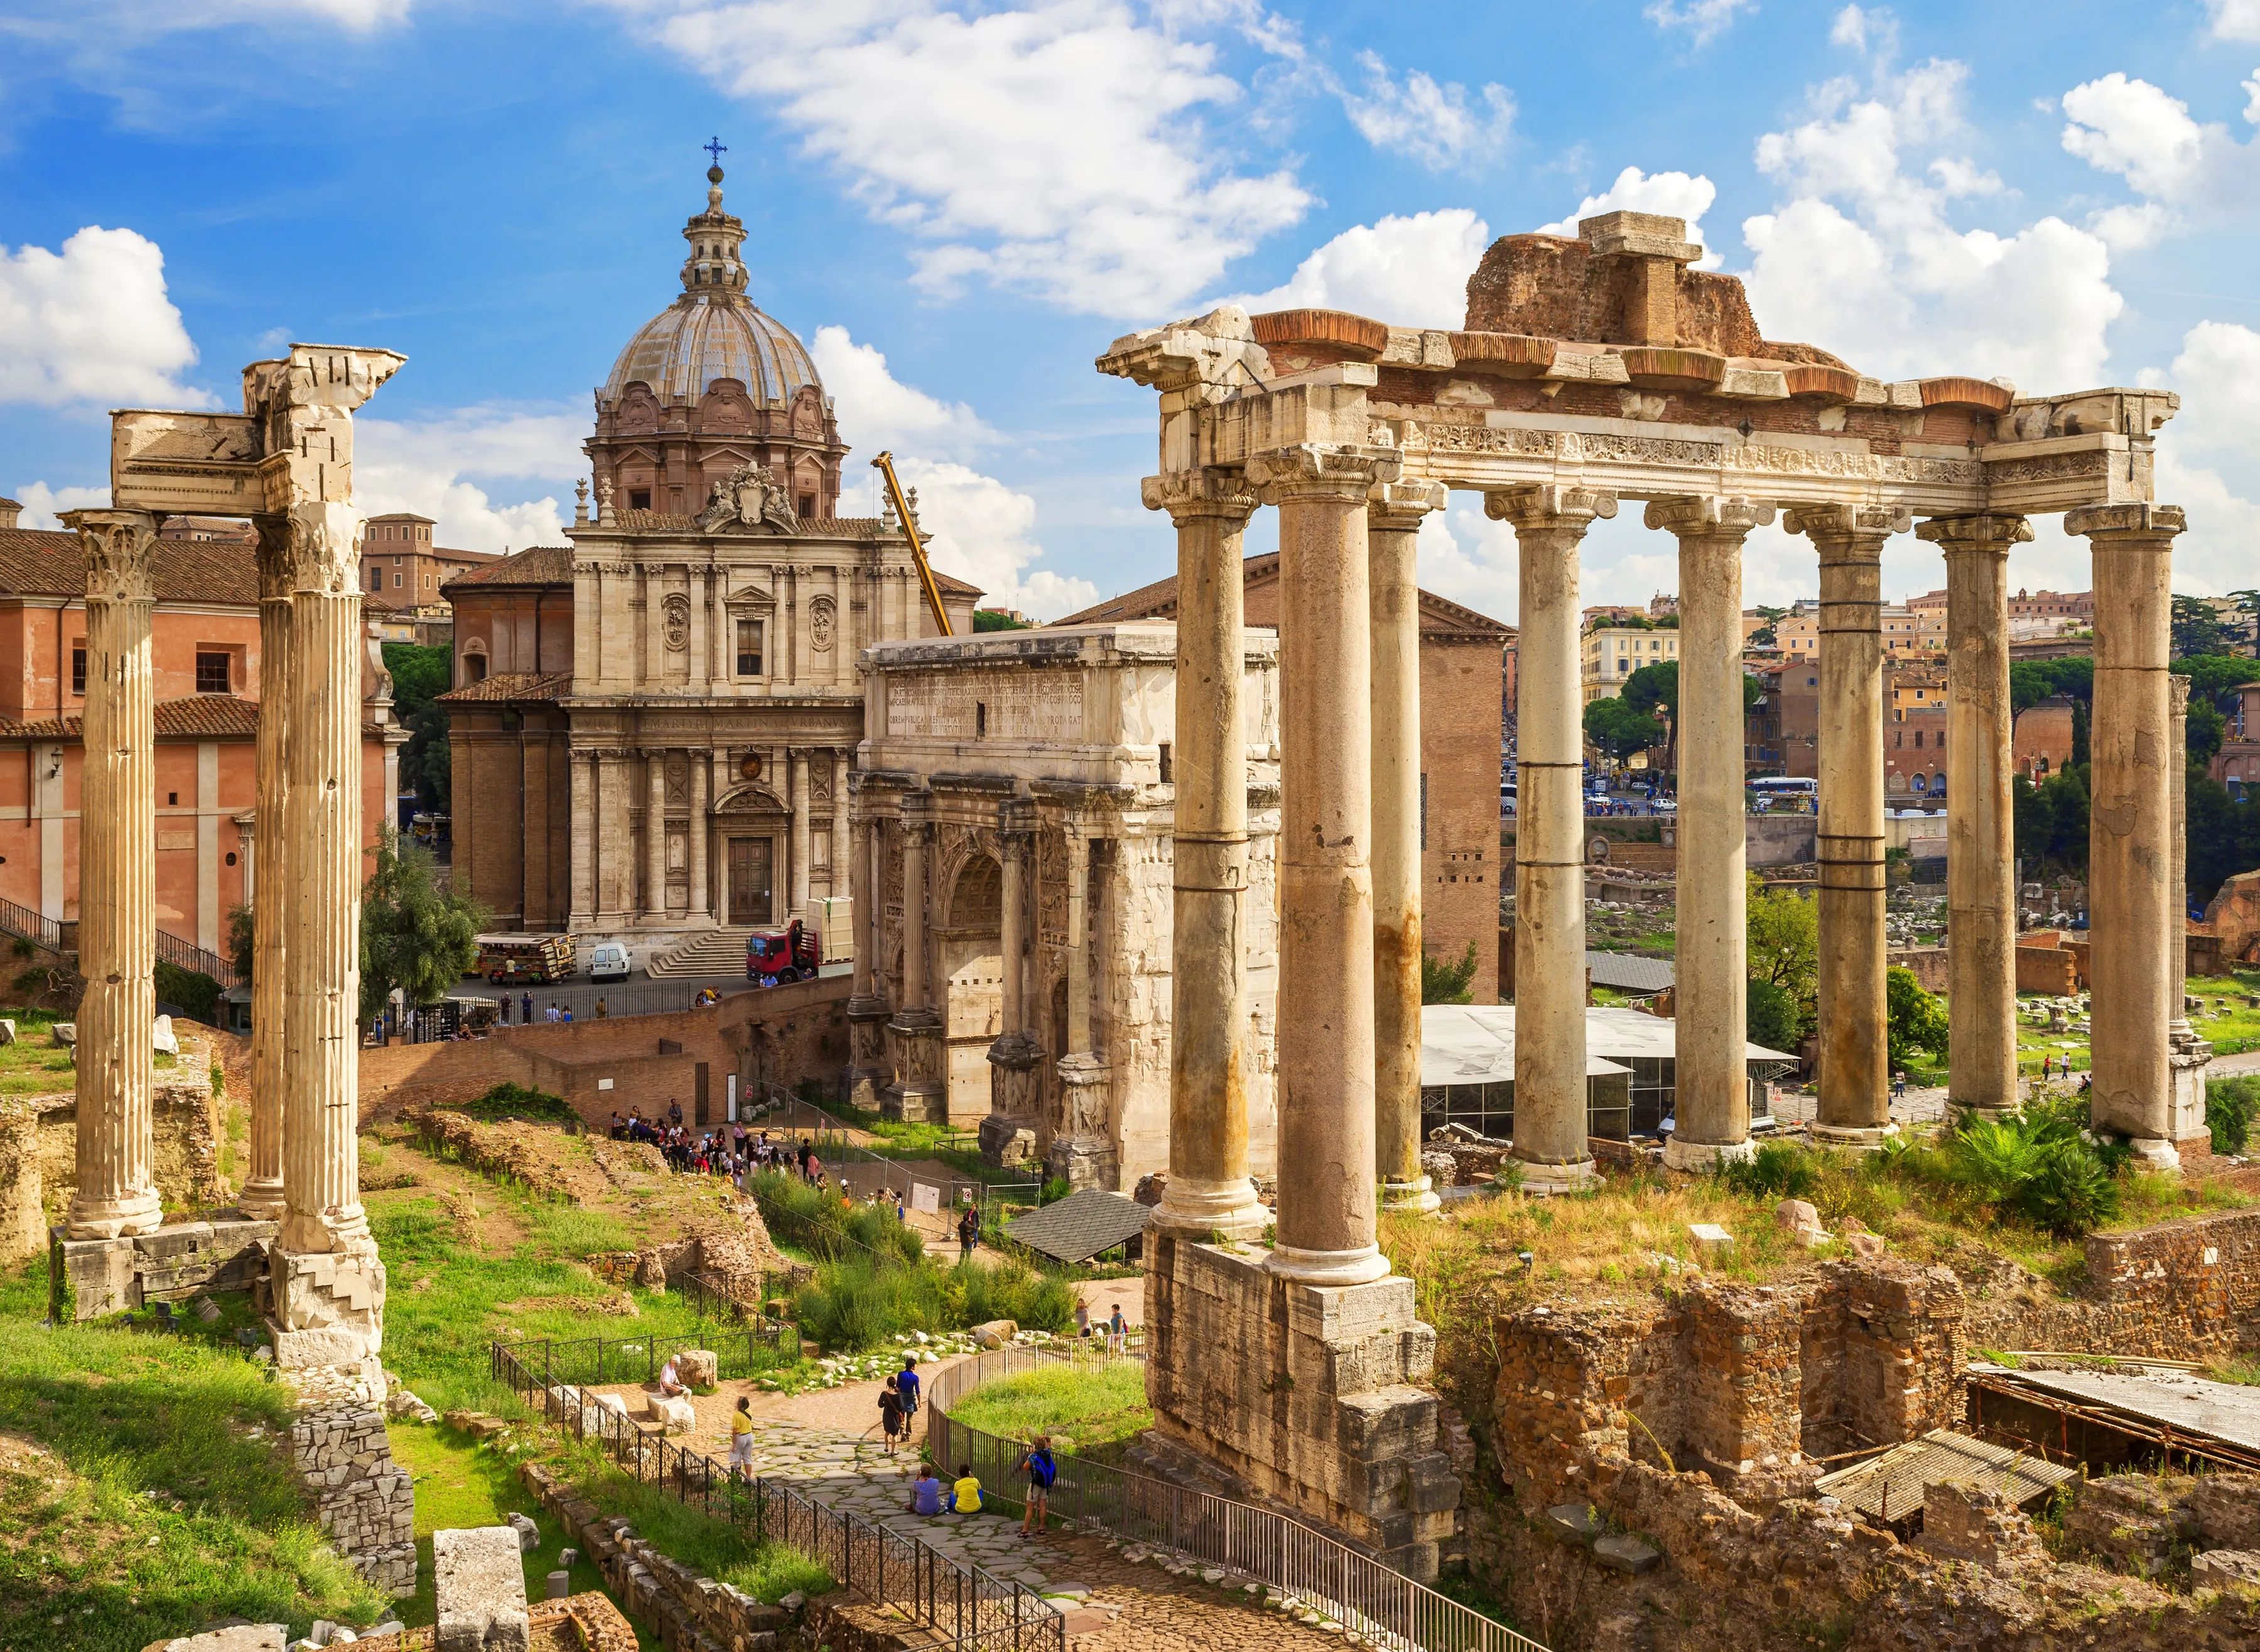 PAPERMOON Fototapete "Roman Forum Rome" Tapeten Gr. B/L: 2,5 m x 1,86 m, Bahnen: 5 St., bunt (mehrfarbig) Fototapeten